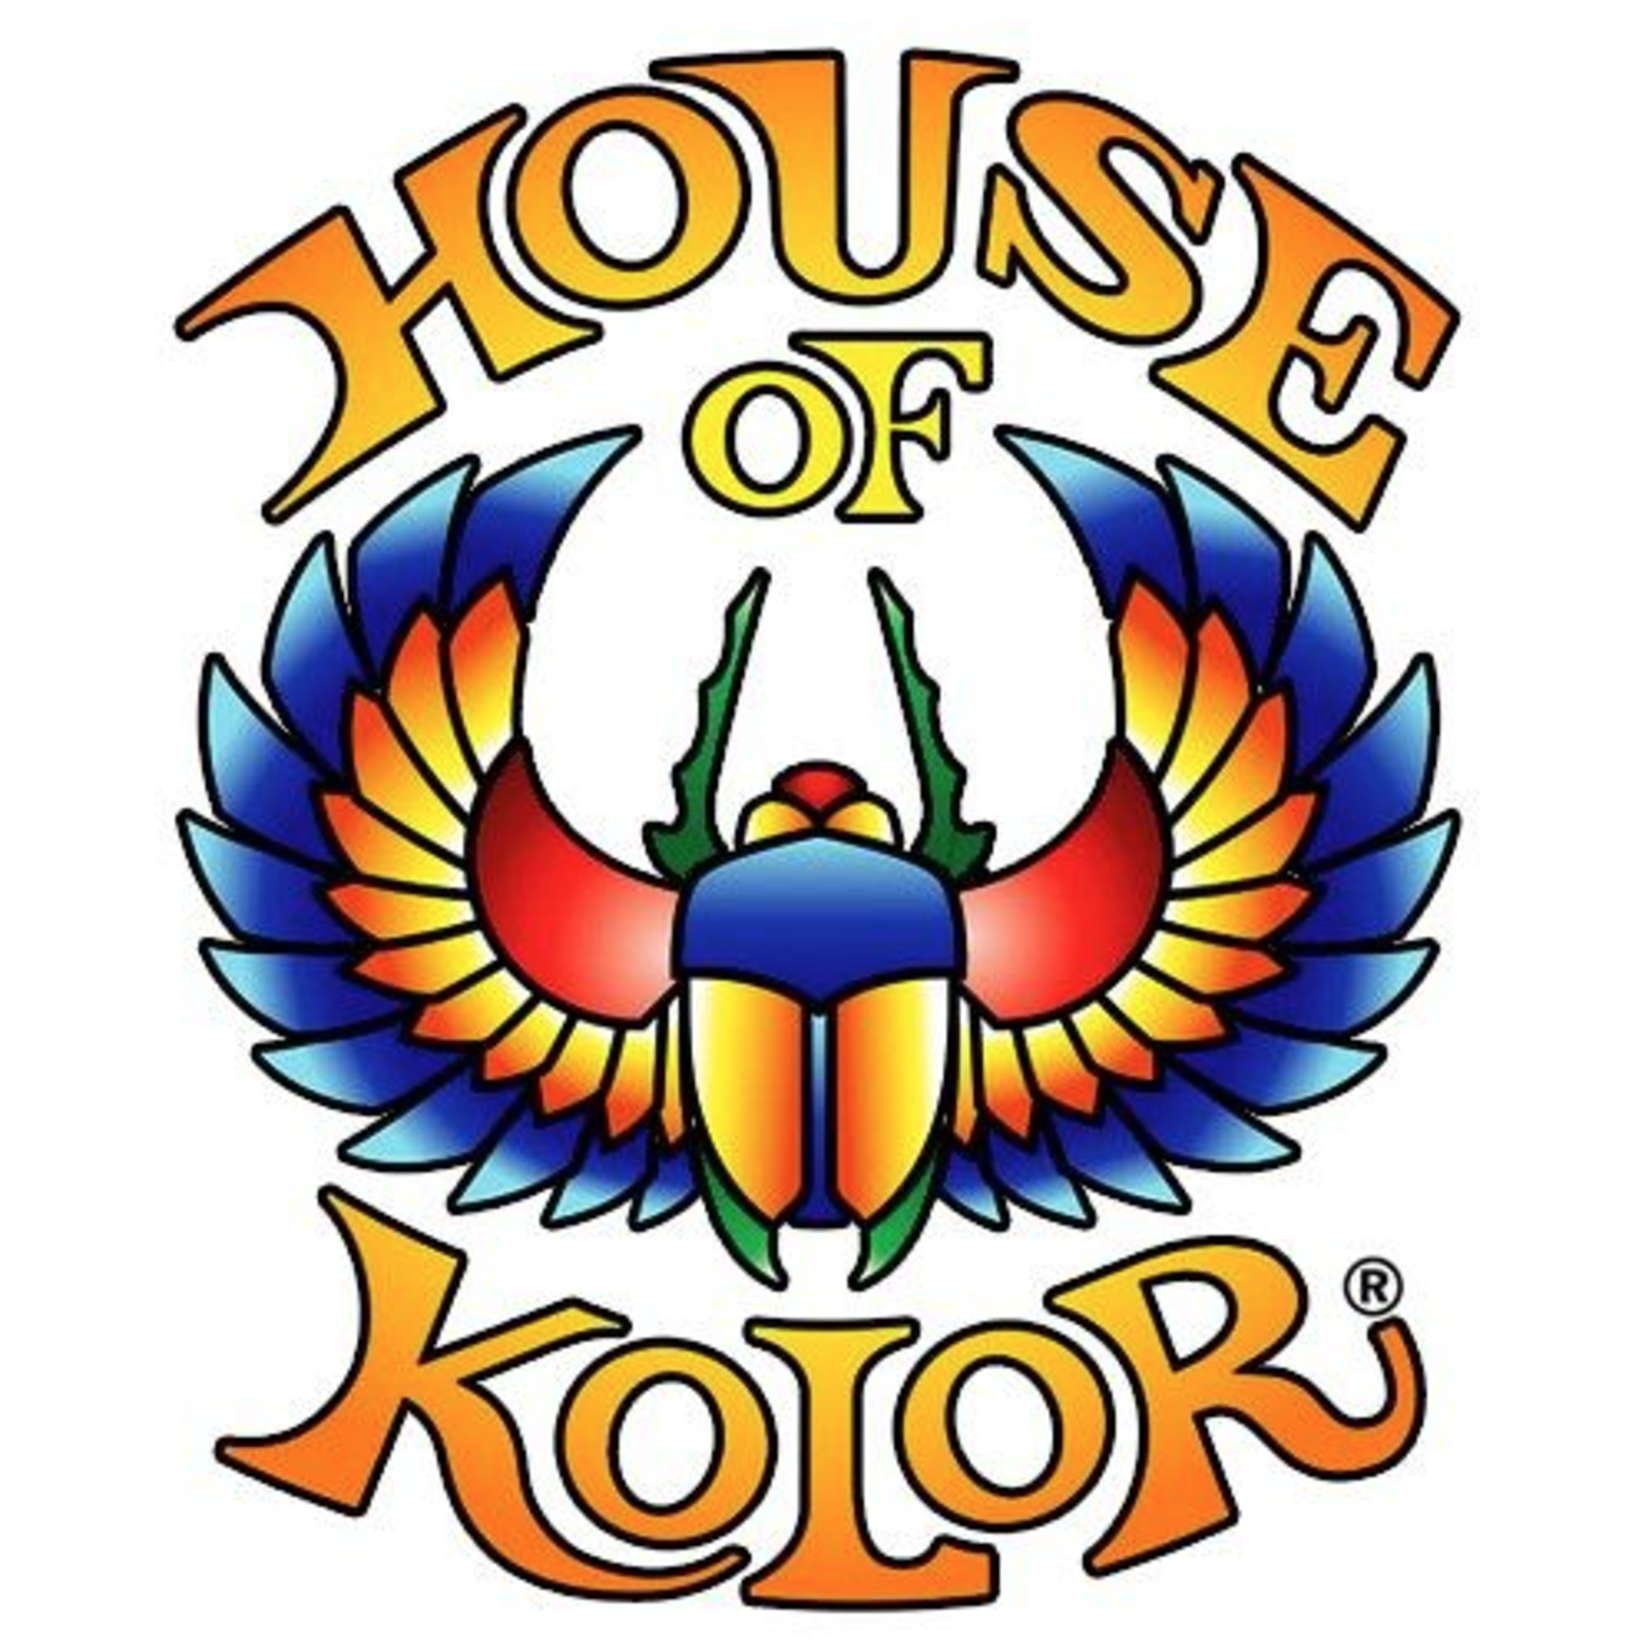 House of Kolor House of Kolor SHIMRIN2  Kandy Karrier